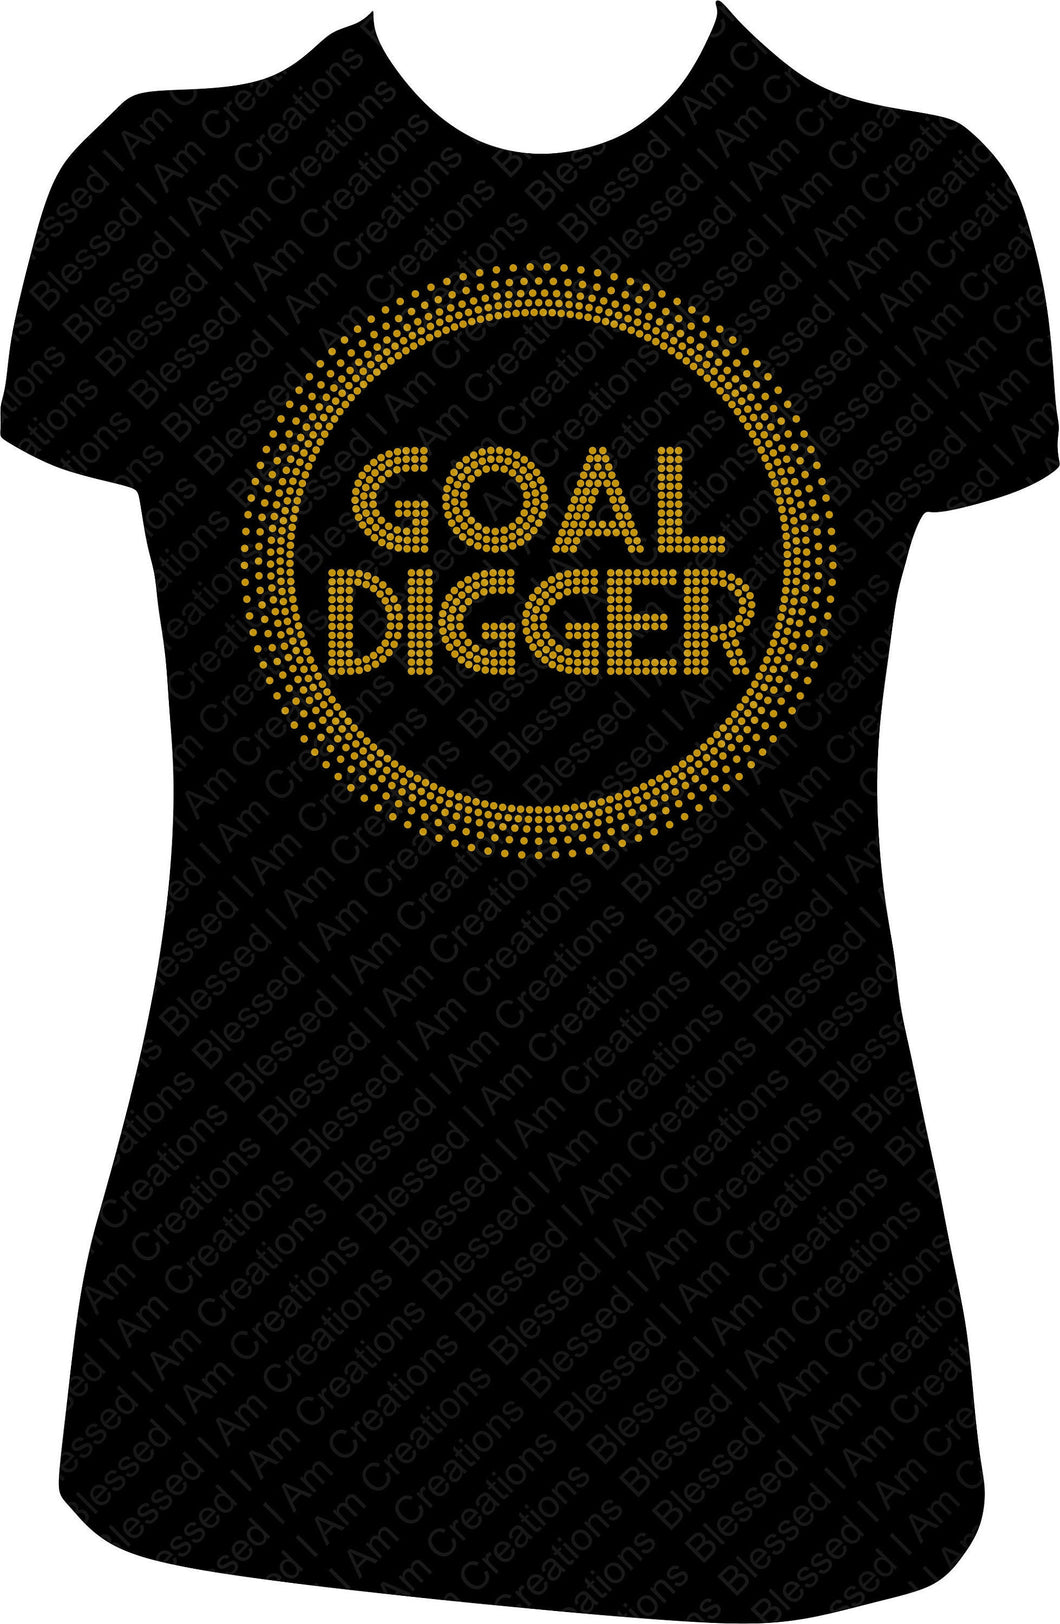 Goal Digger Rhinestone Shirt